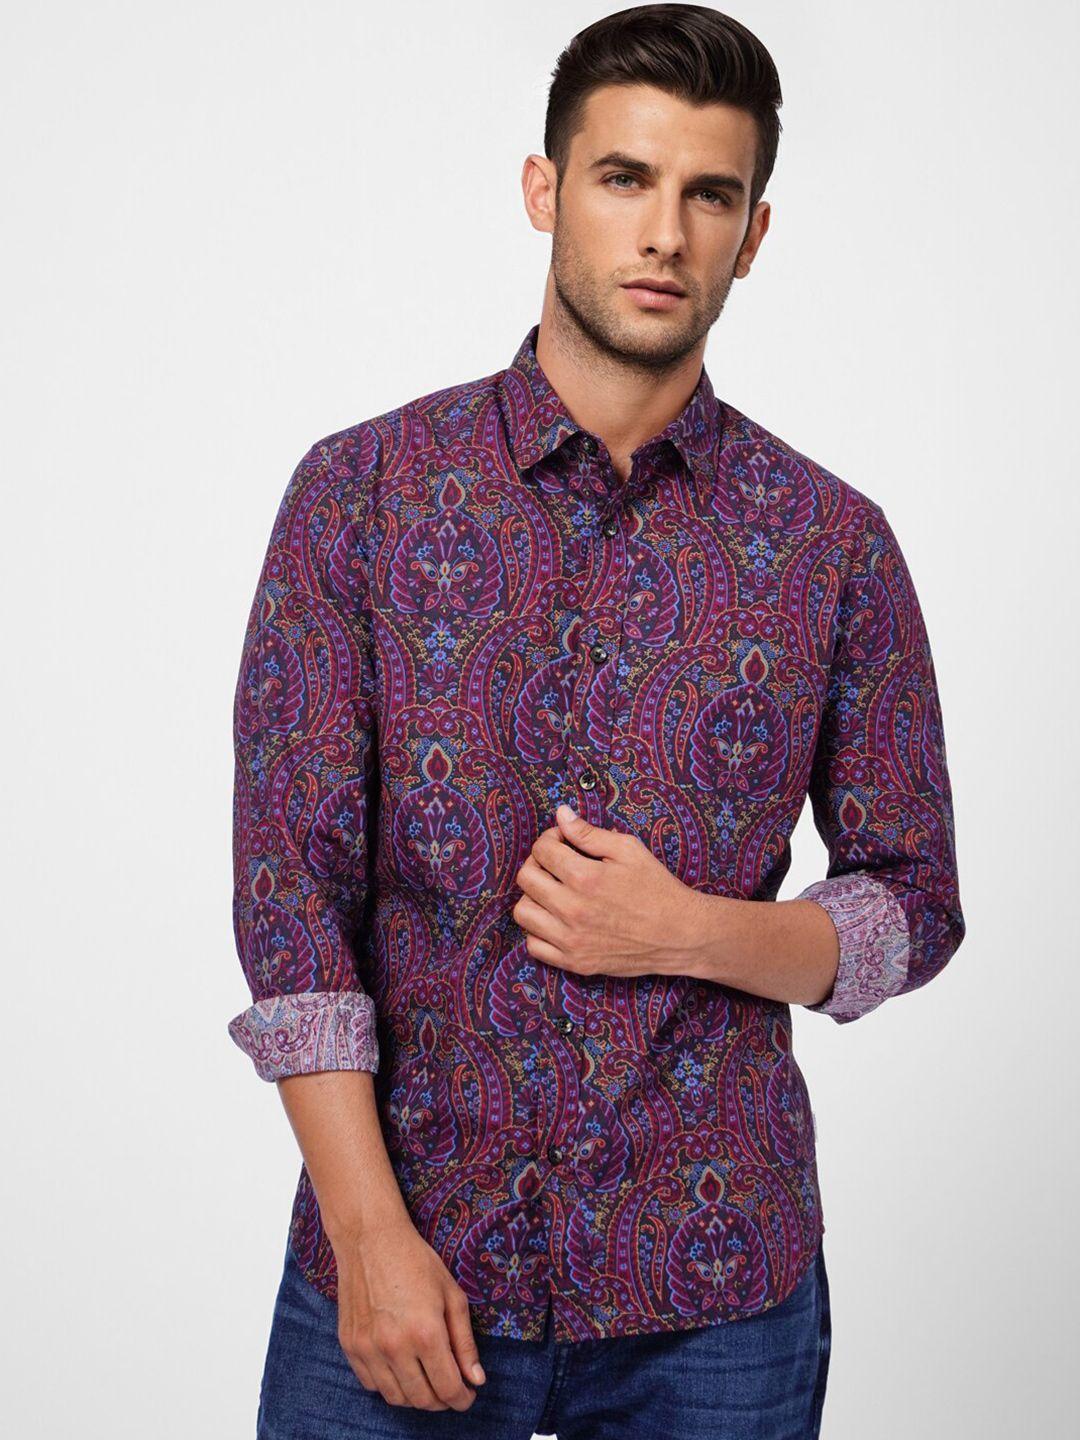 jack & jones ethnic motifs printed casual cotton shirt